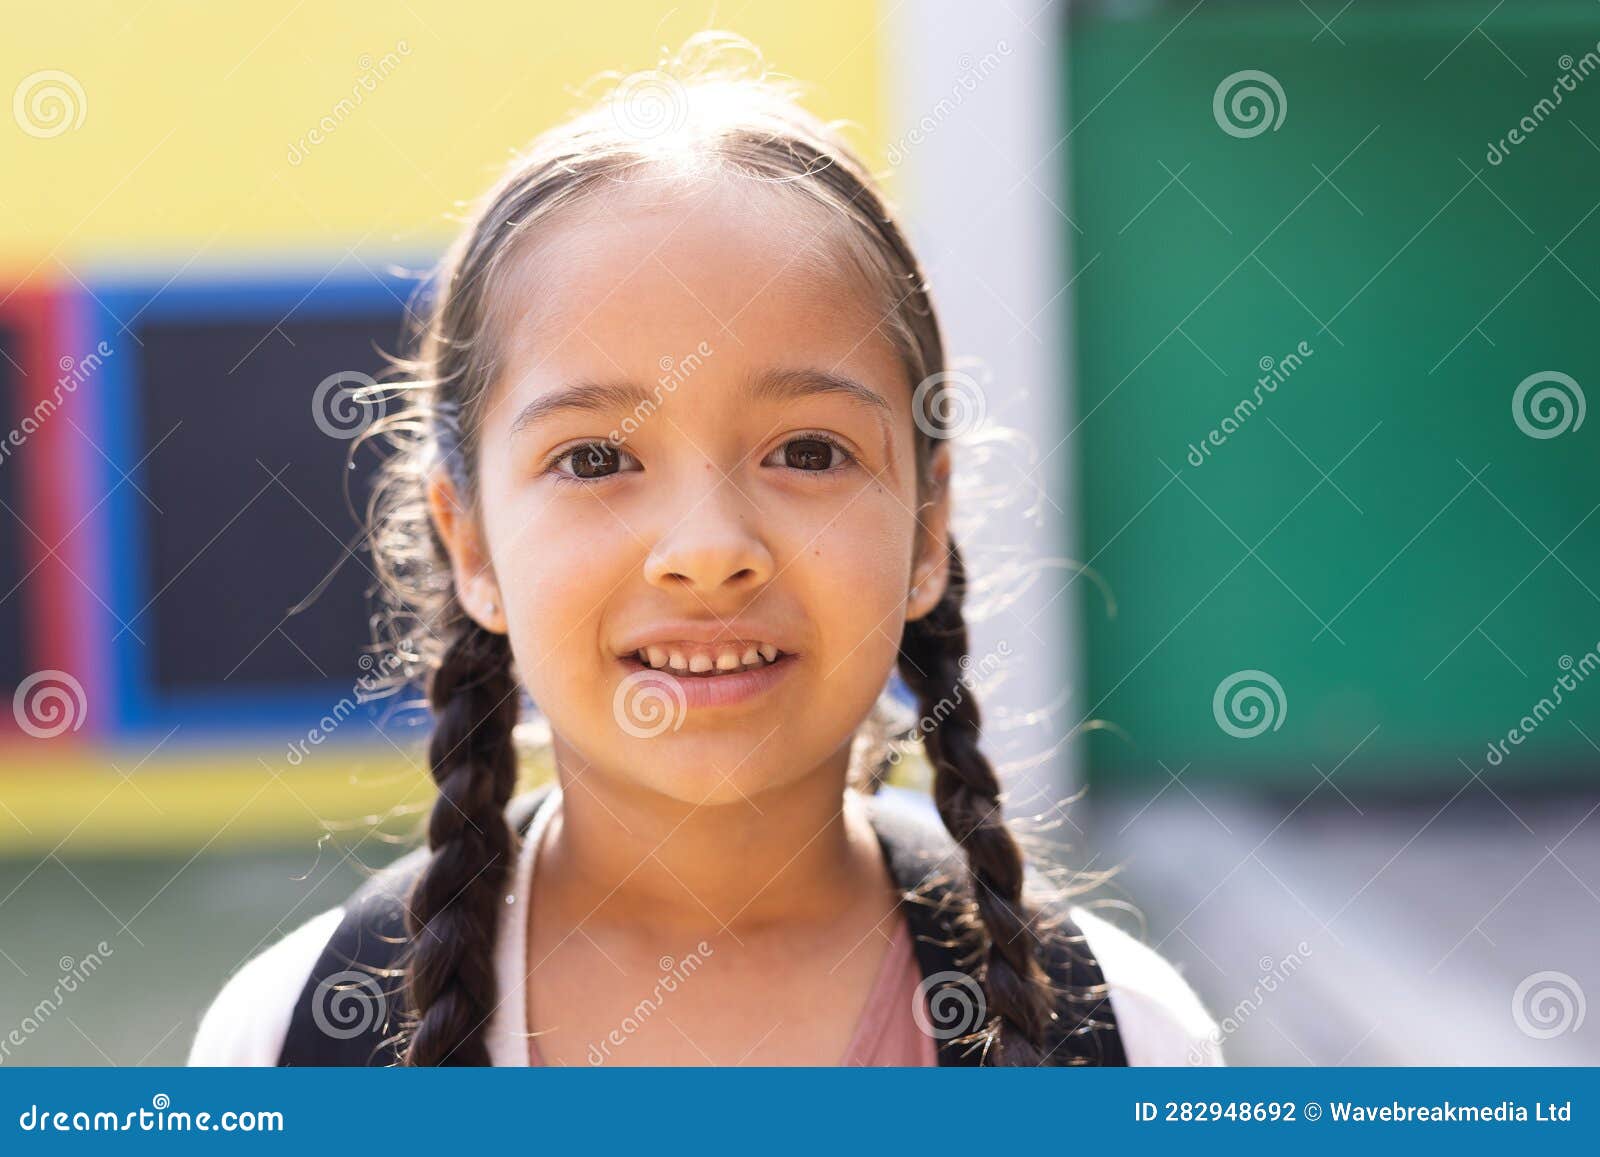 portrait of smiling cauasian ary schoolgirl in school playground, copy space